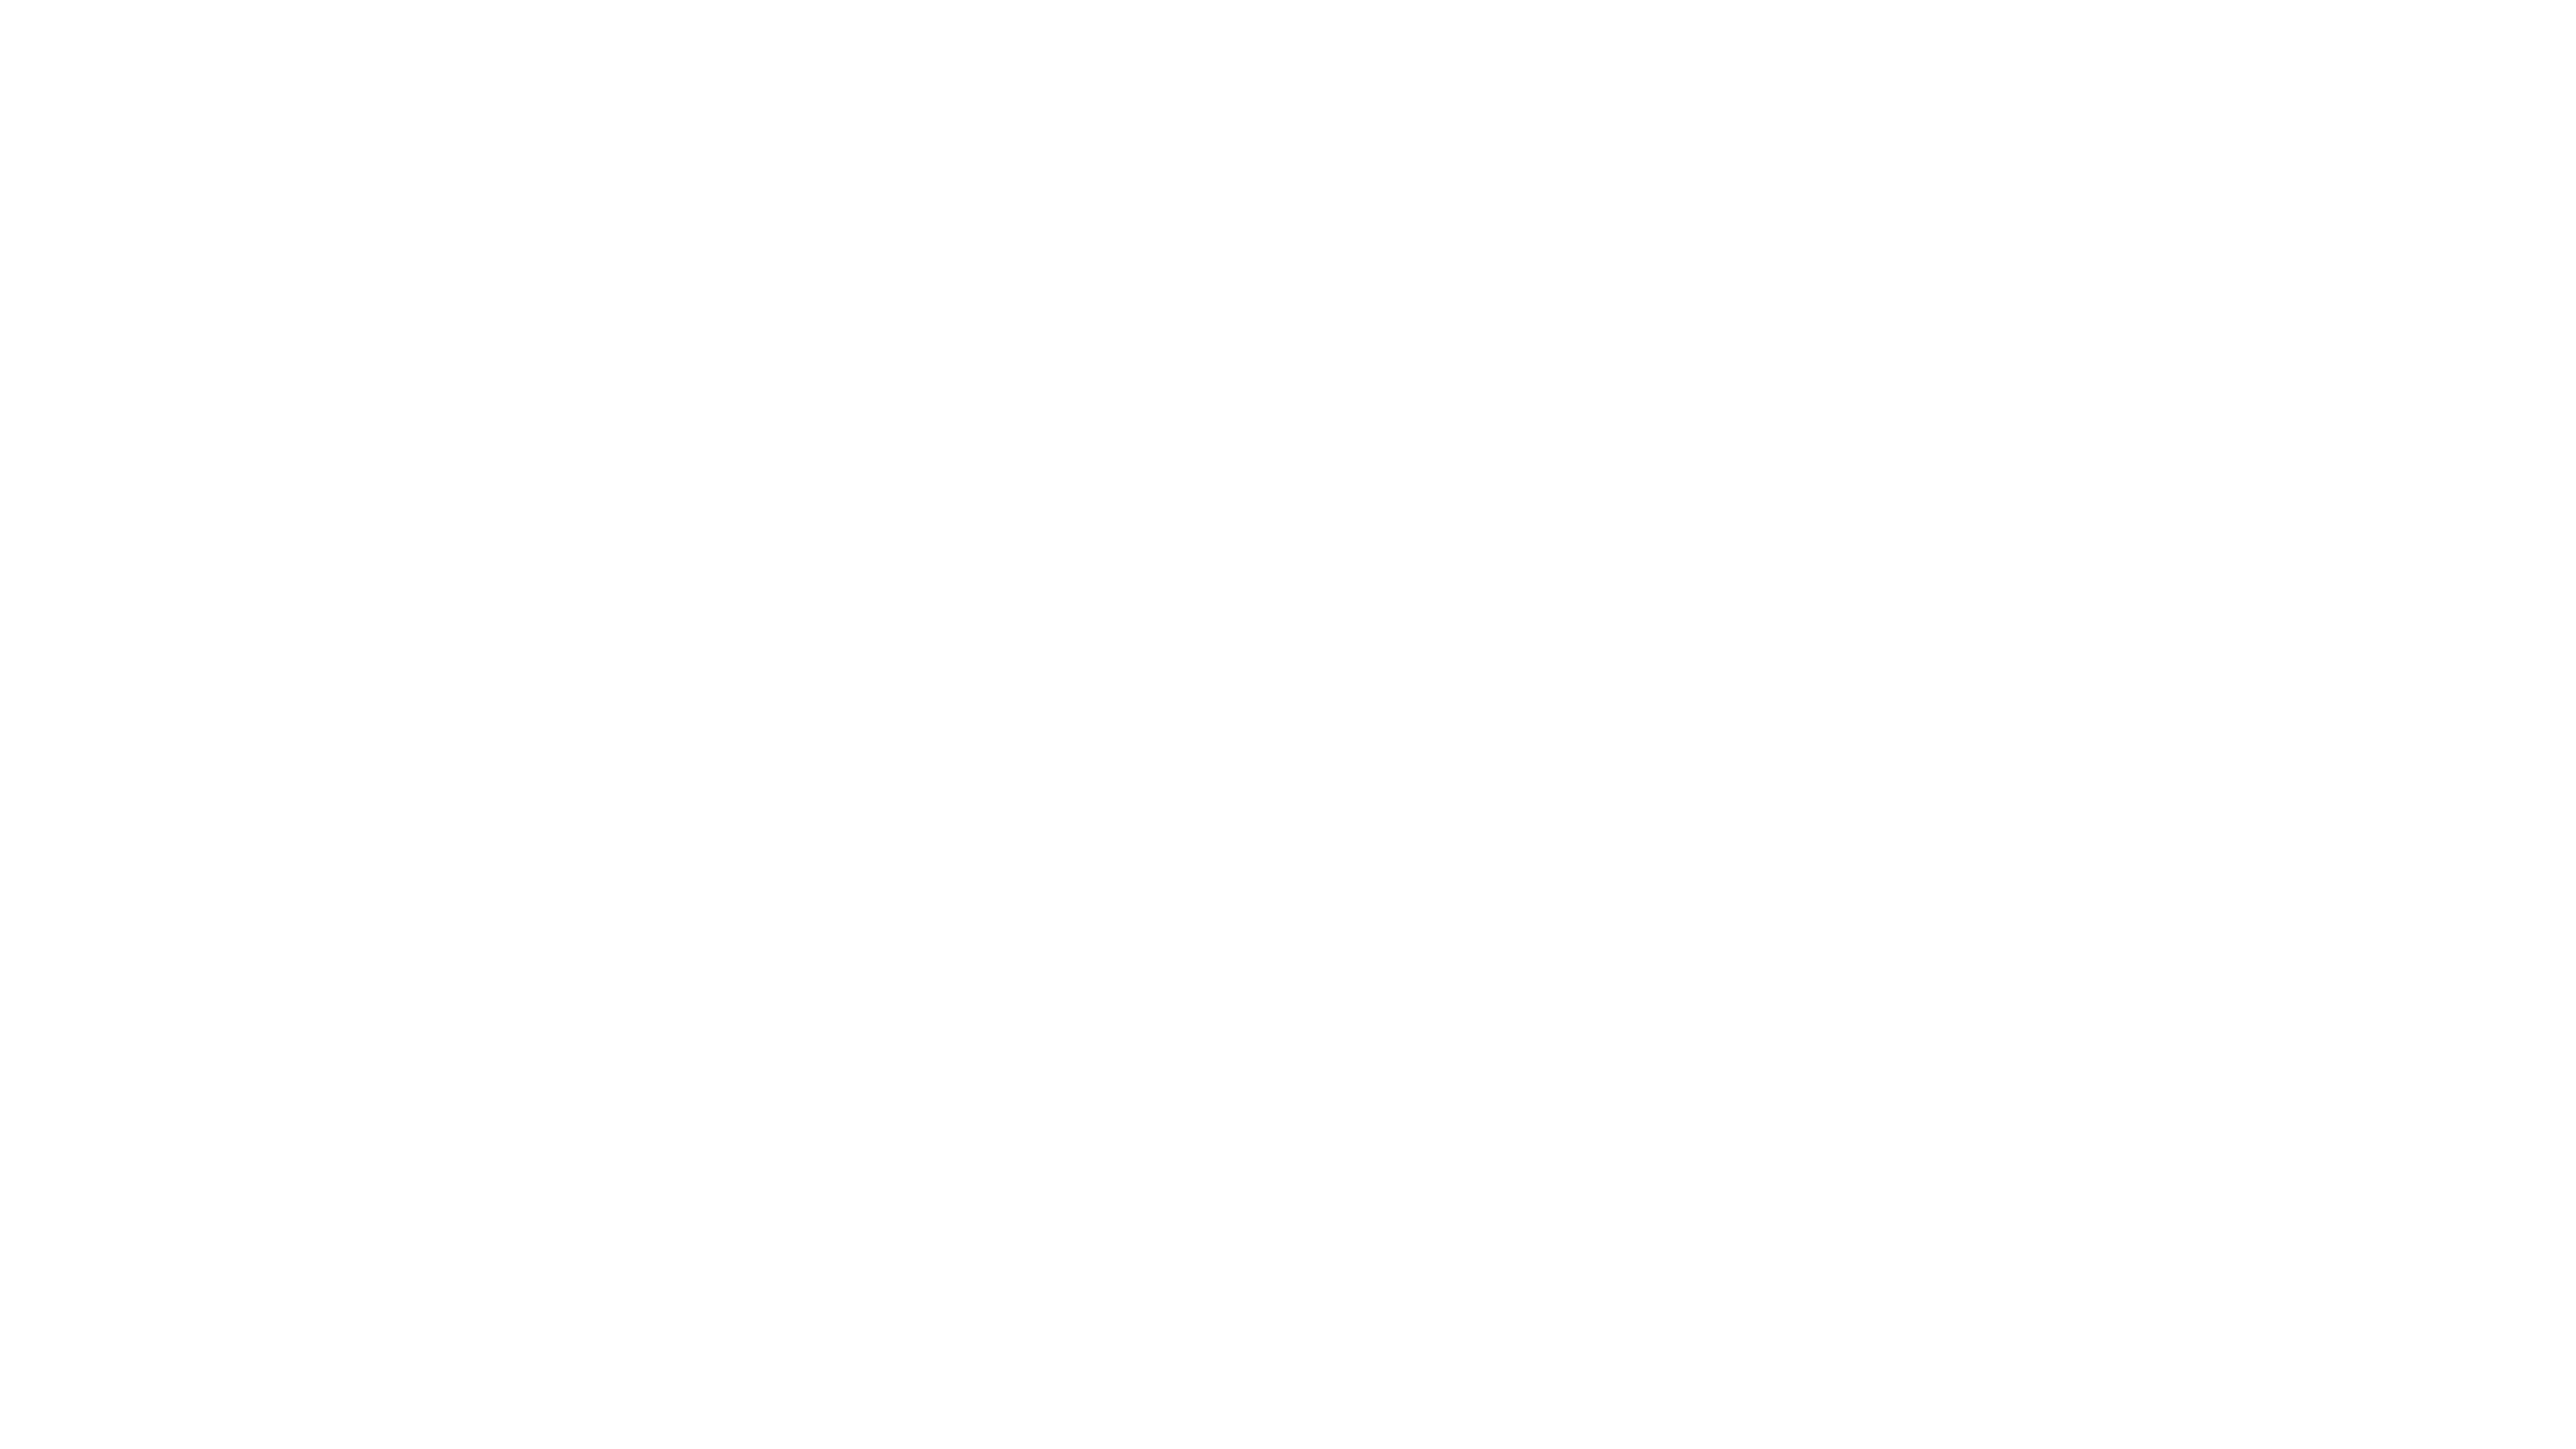 Origami Paddler logo